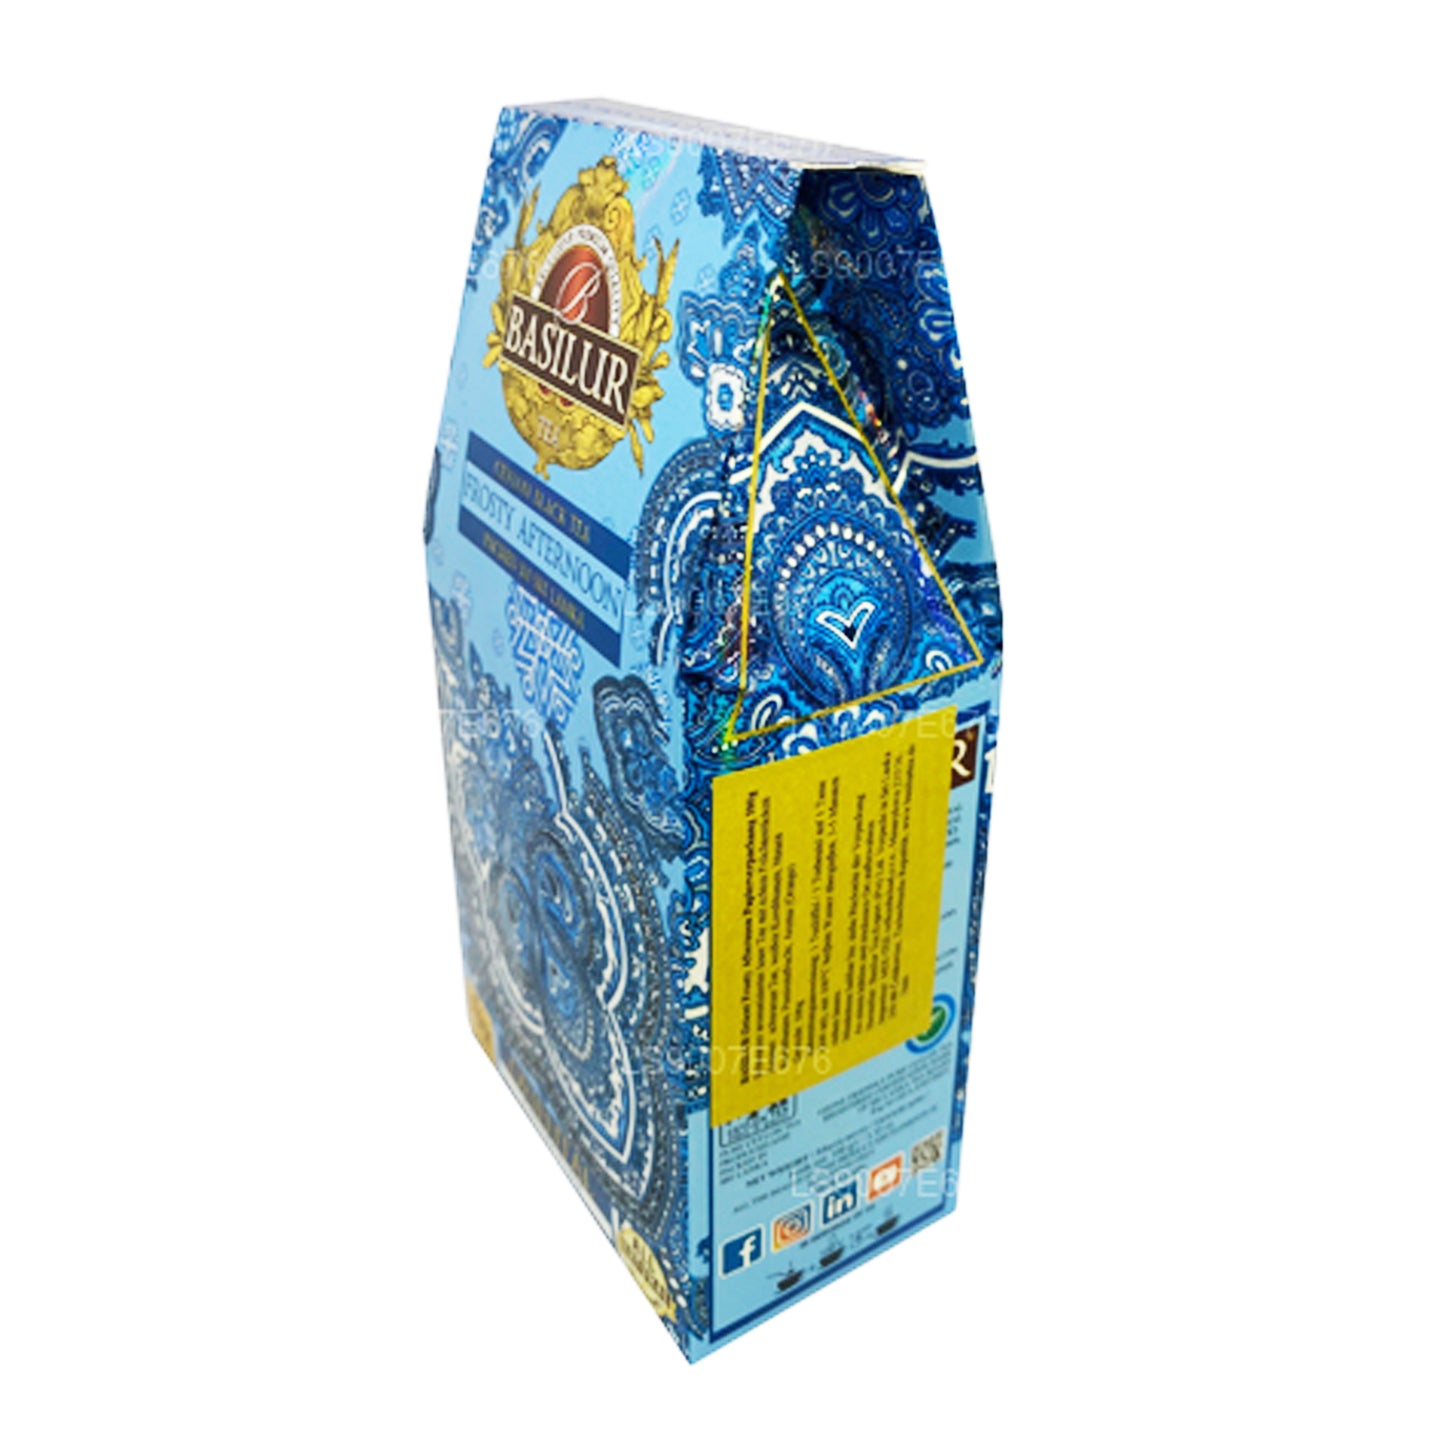 Basilur (orientalna) mroźna popołudniowa czarna herbata cejlońska (100g)